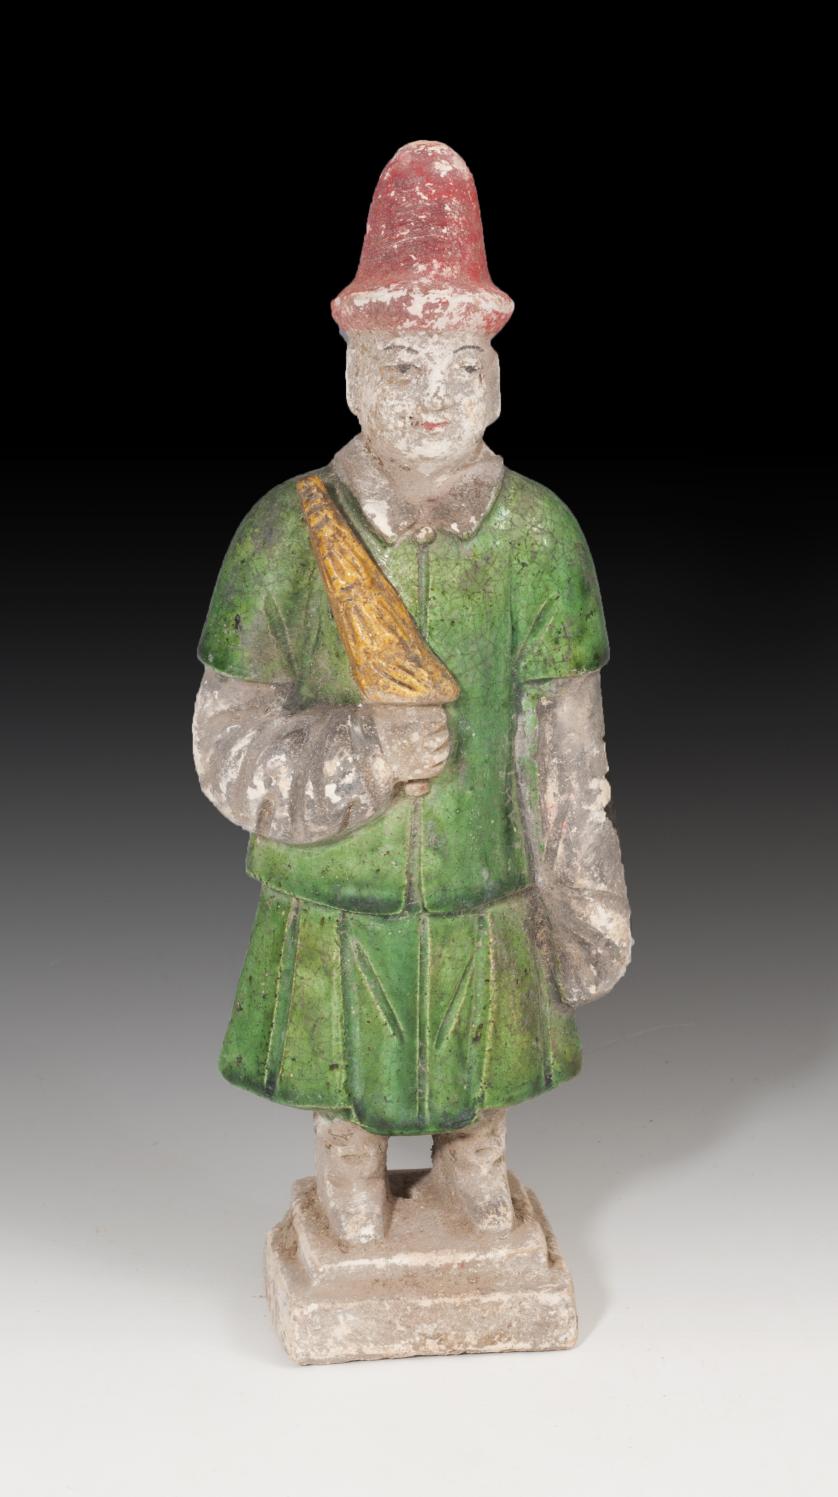 1116   -  CHINA. Figura de músico. (Dinastía Ming, 1500-1600 d.C.). Terracota policromada y vidriada. Altura 25,8 cm. 